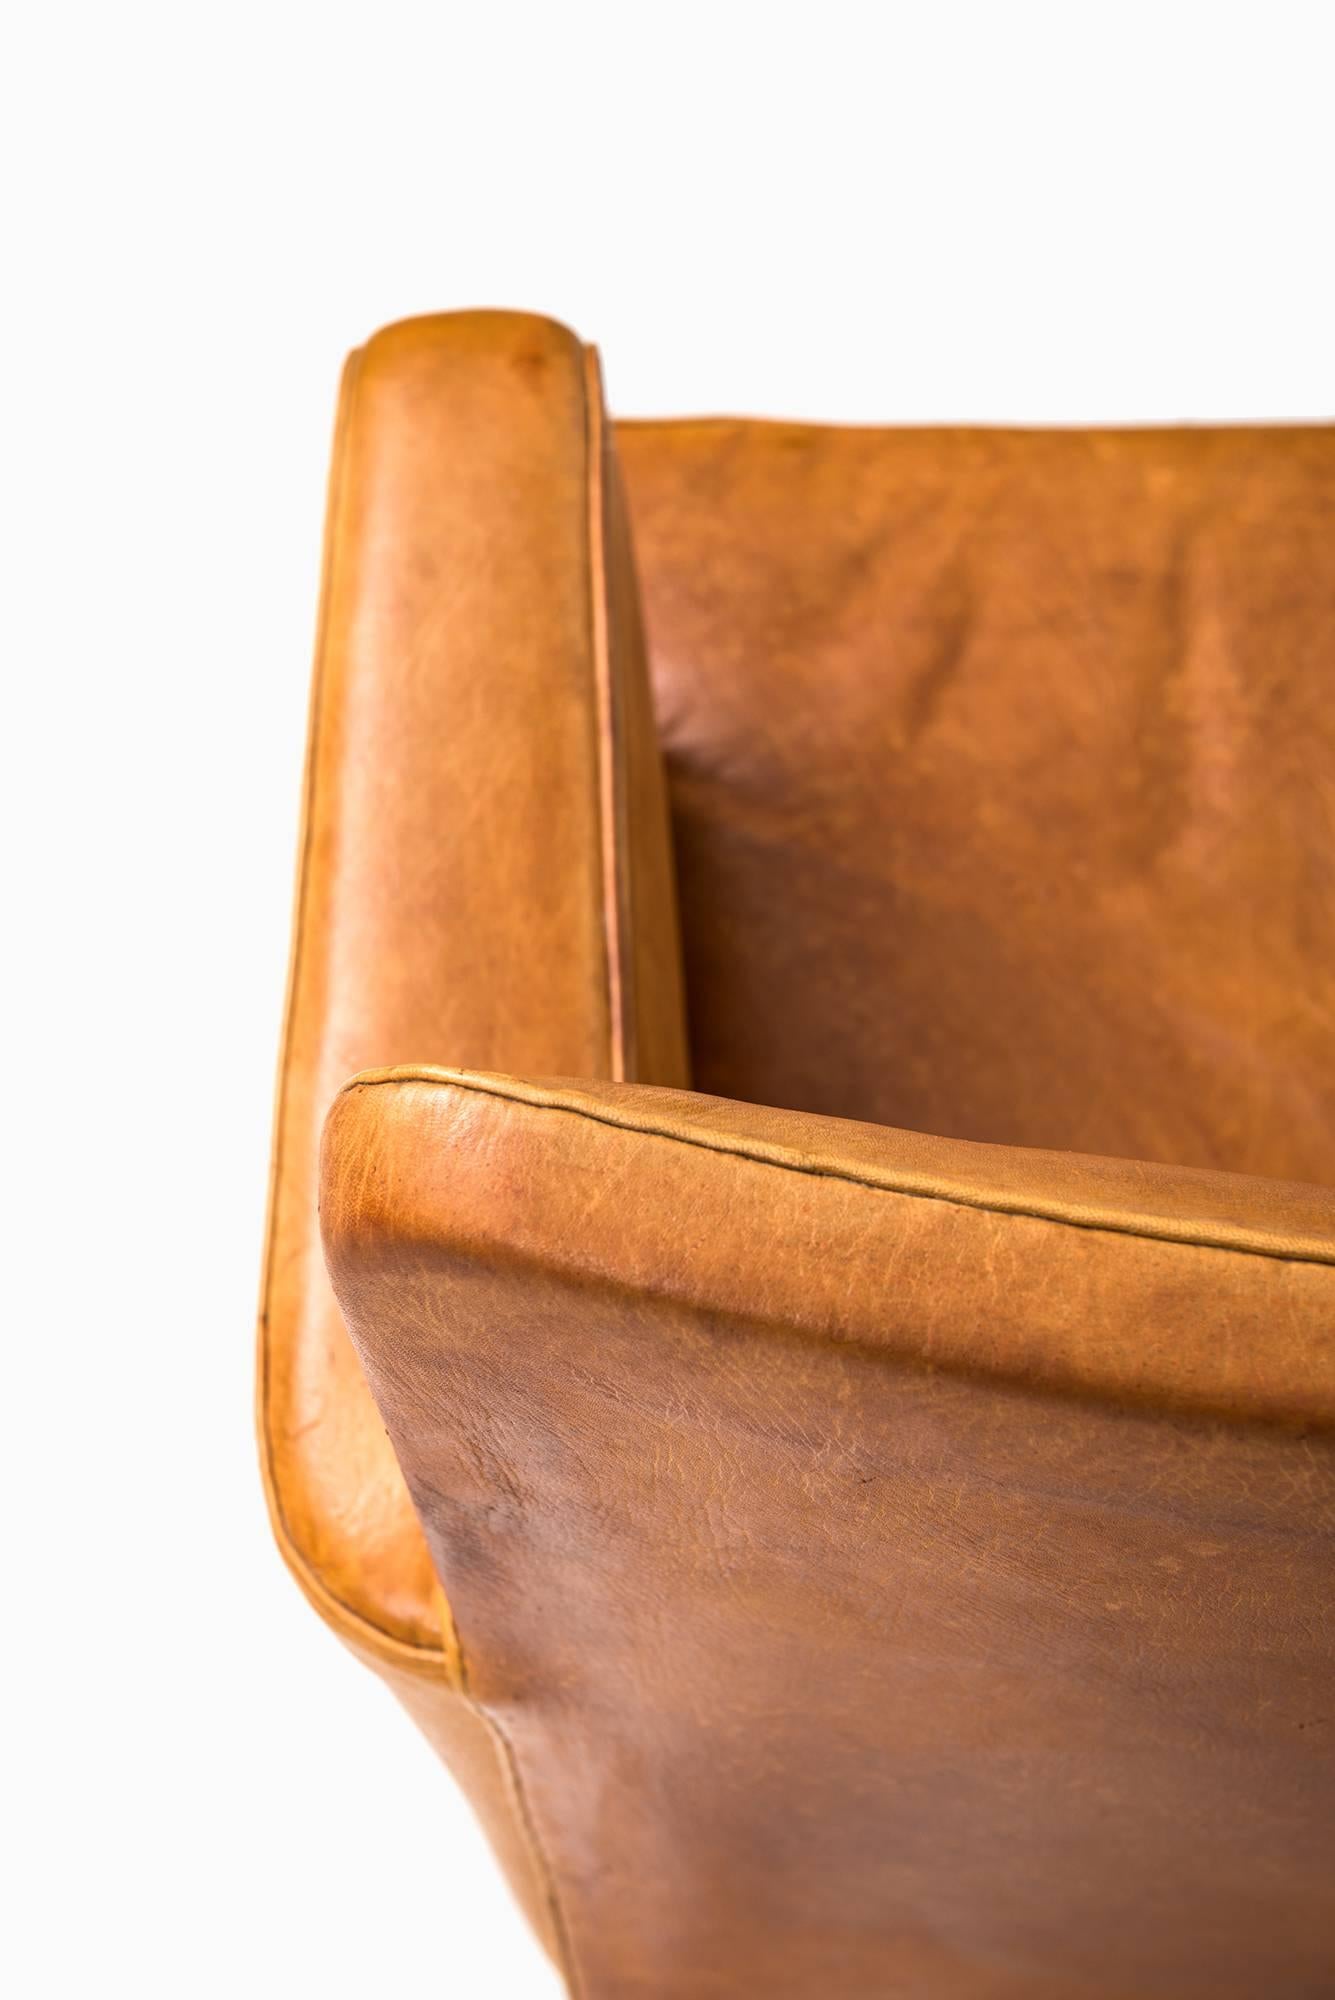 Leather Kaare Klint Easy Chairs Model 5313 by Rud. Rasmussen Cabinetmakers in Denmark